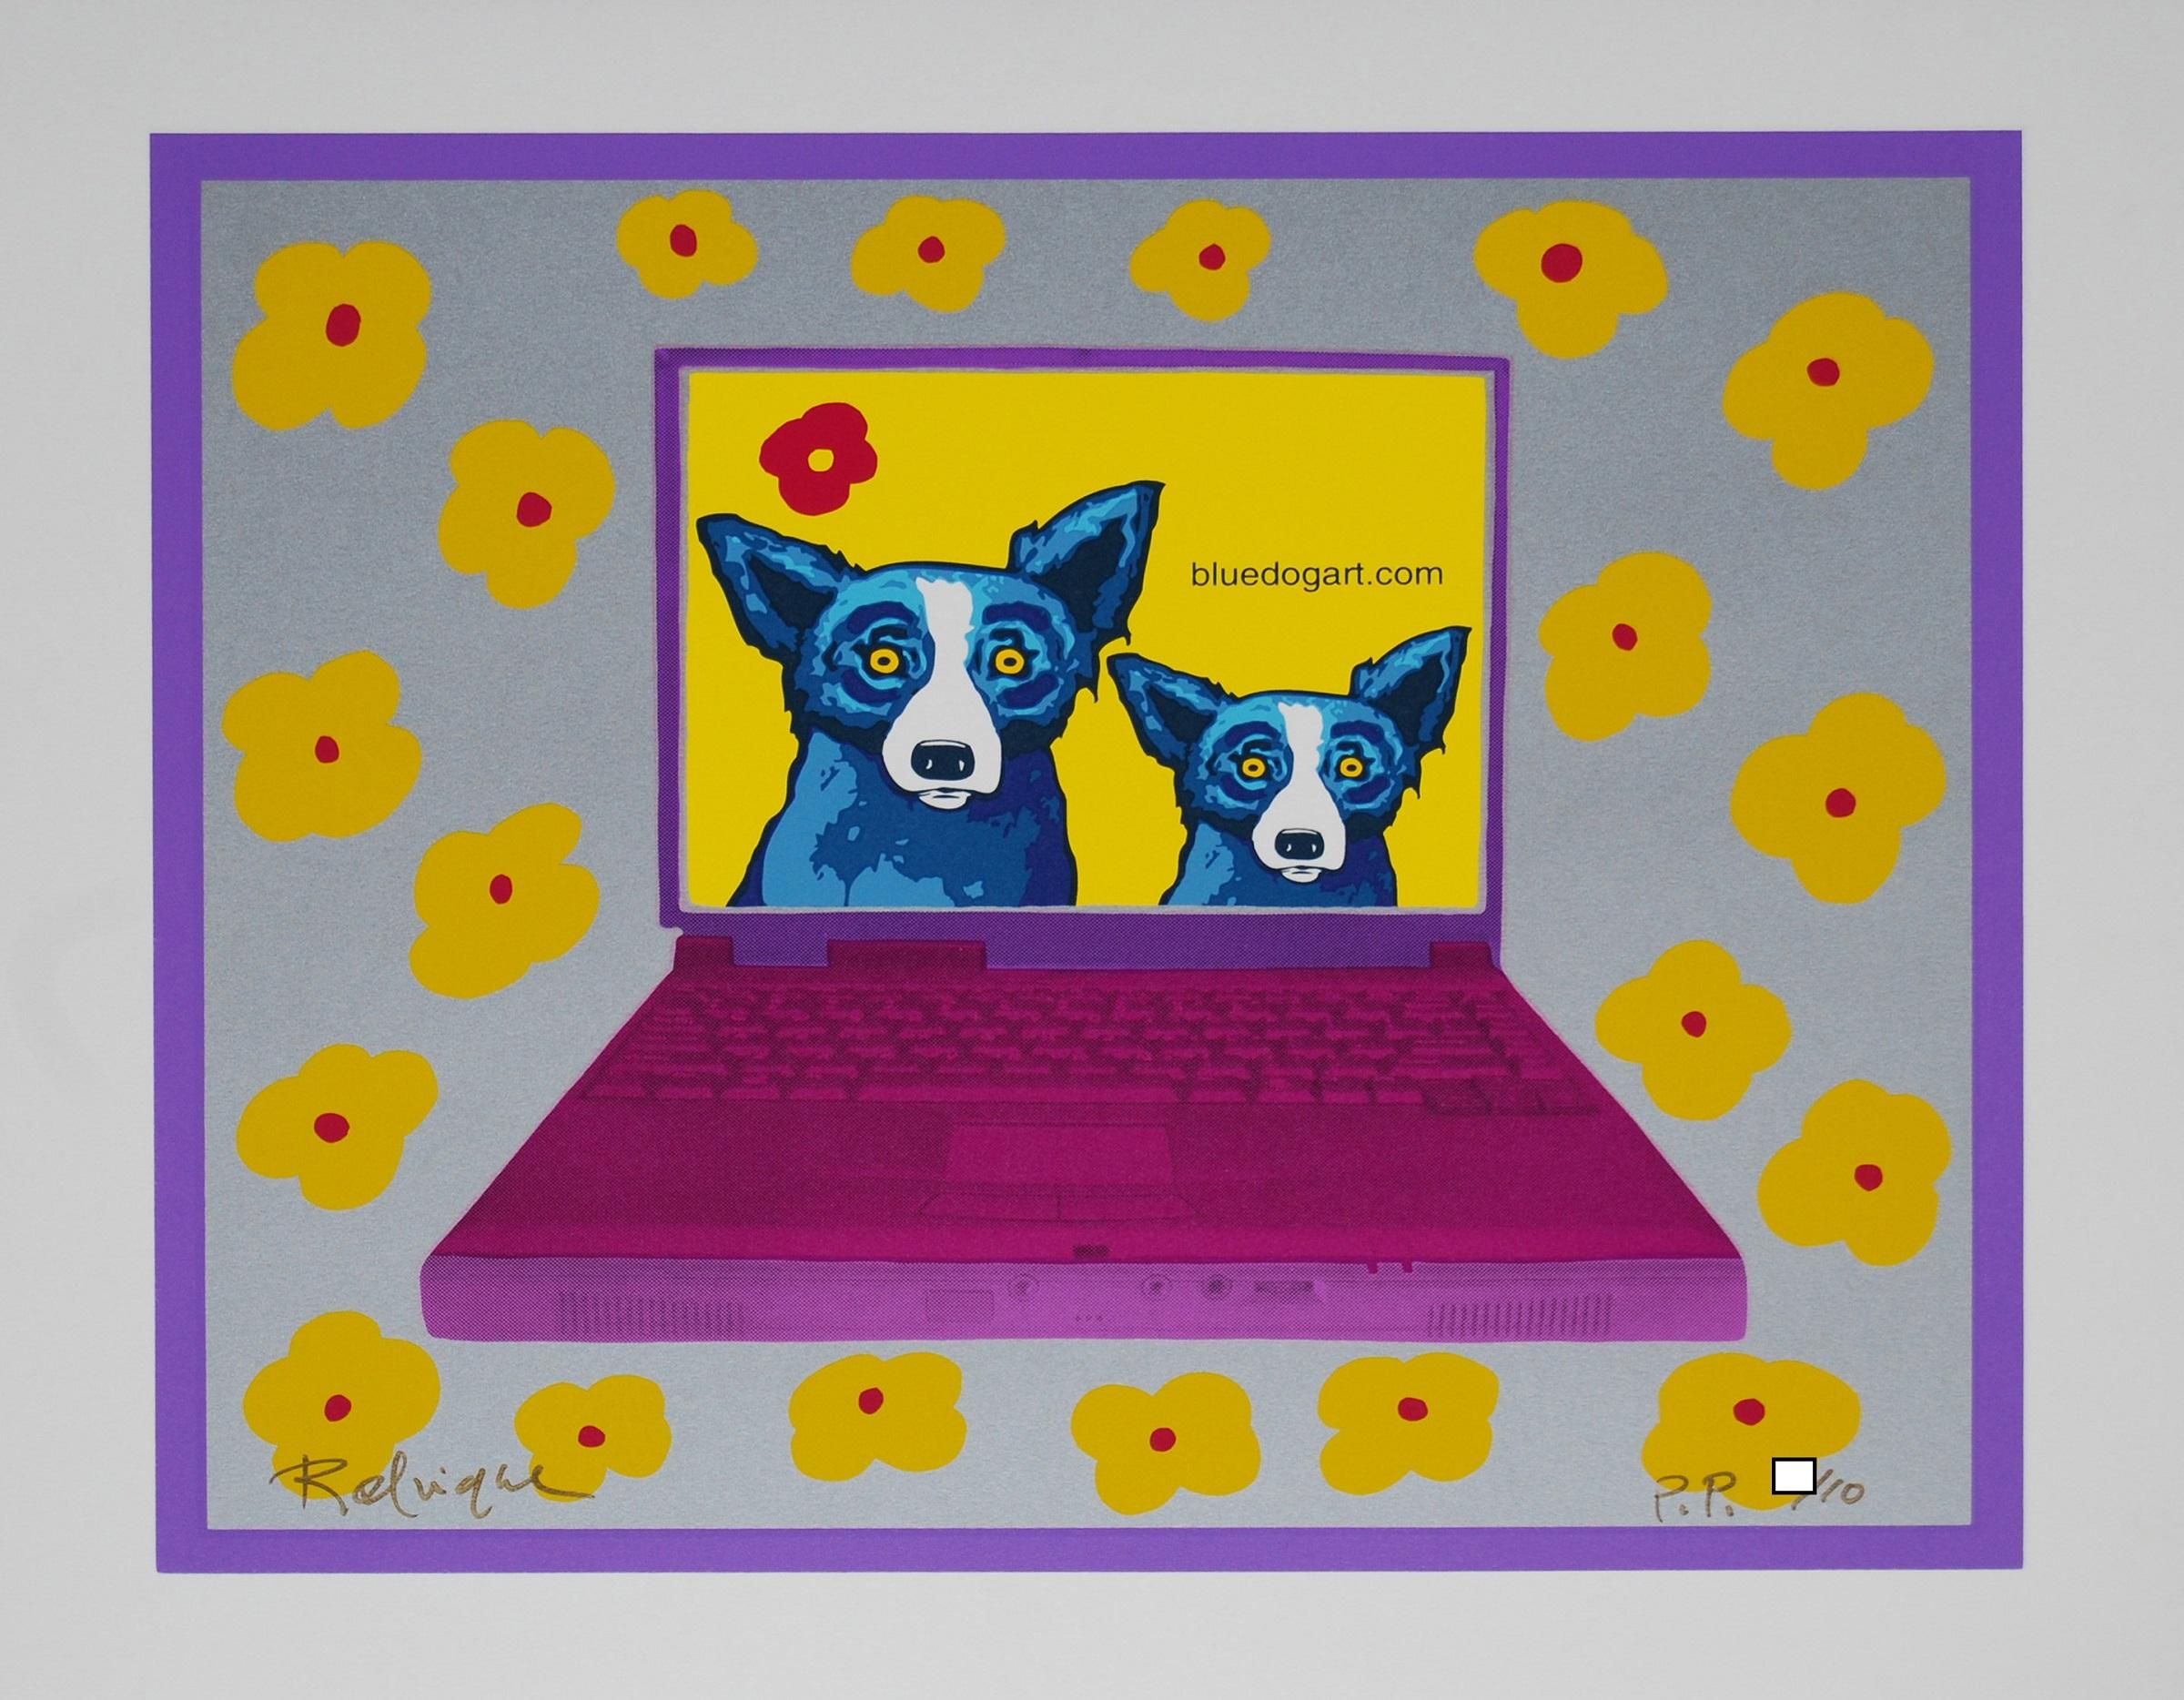 George Rodrigue Animal Print - Bluedogart com Yellow Flowers - Signed Silkscreen Print Blue Dog